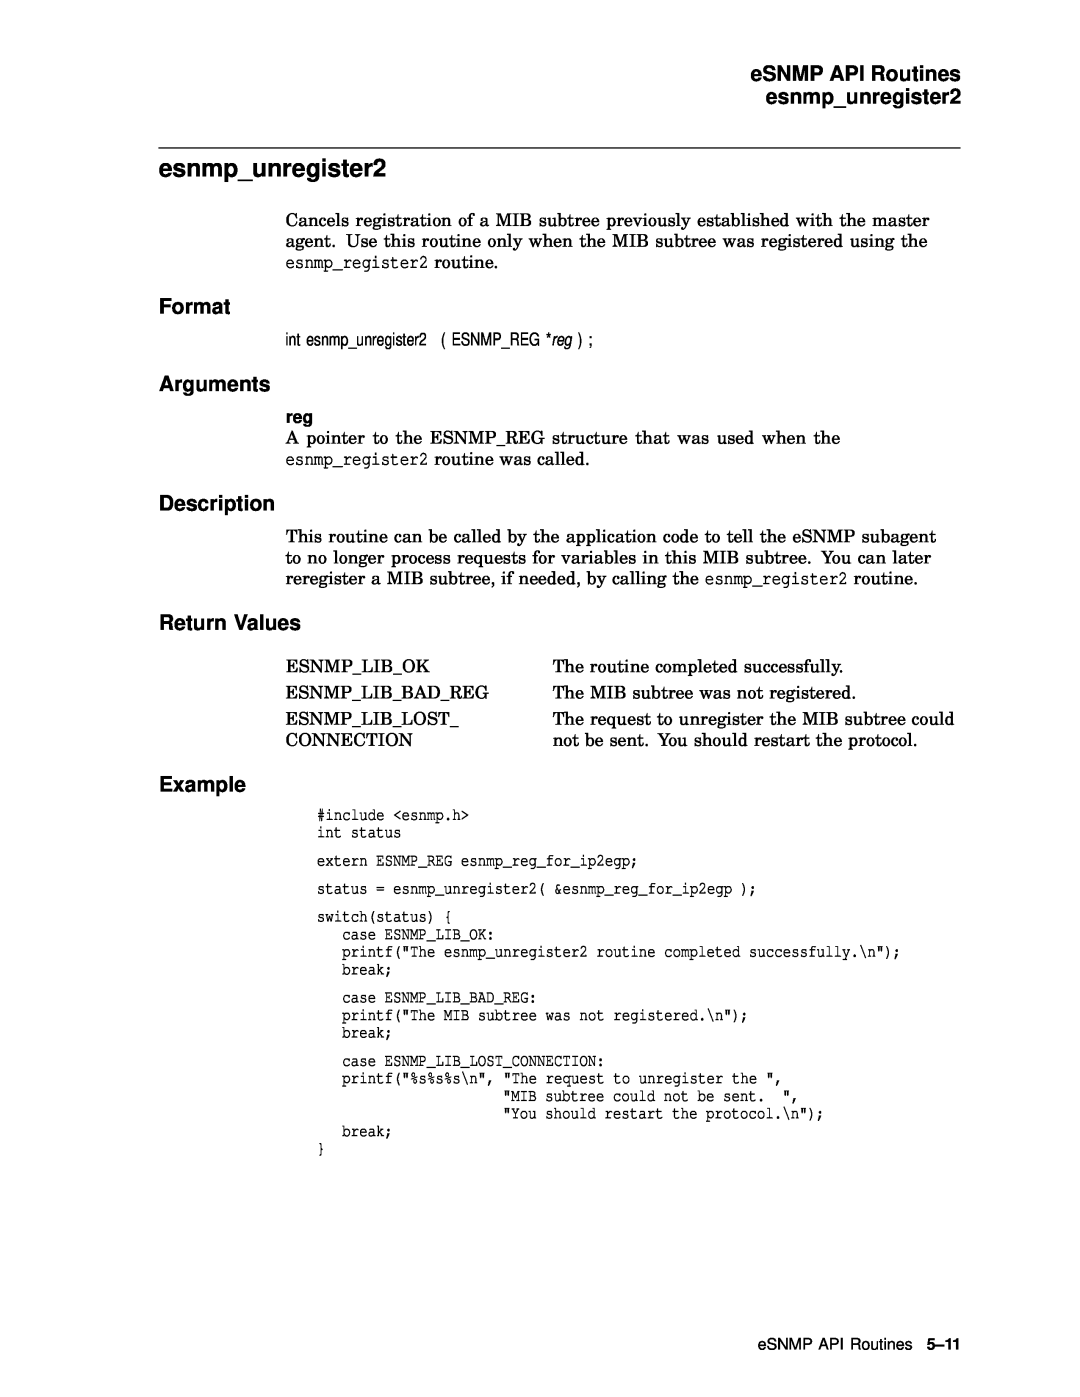 Compaq AAR04BCTE manual eSNMP API Routines esnmpunregister2, Format, Arguments, Description, Return Values, Example 